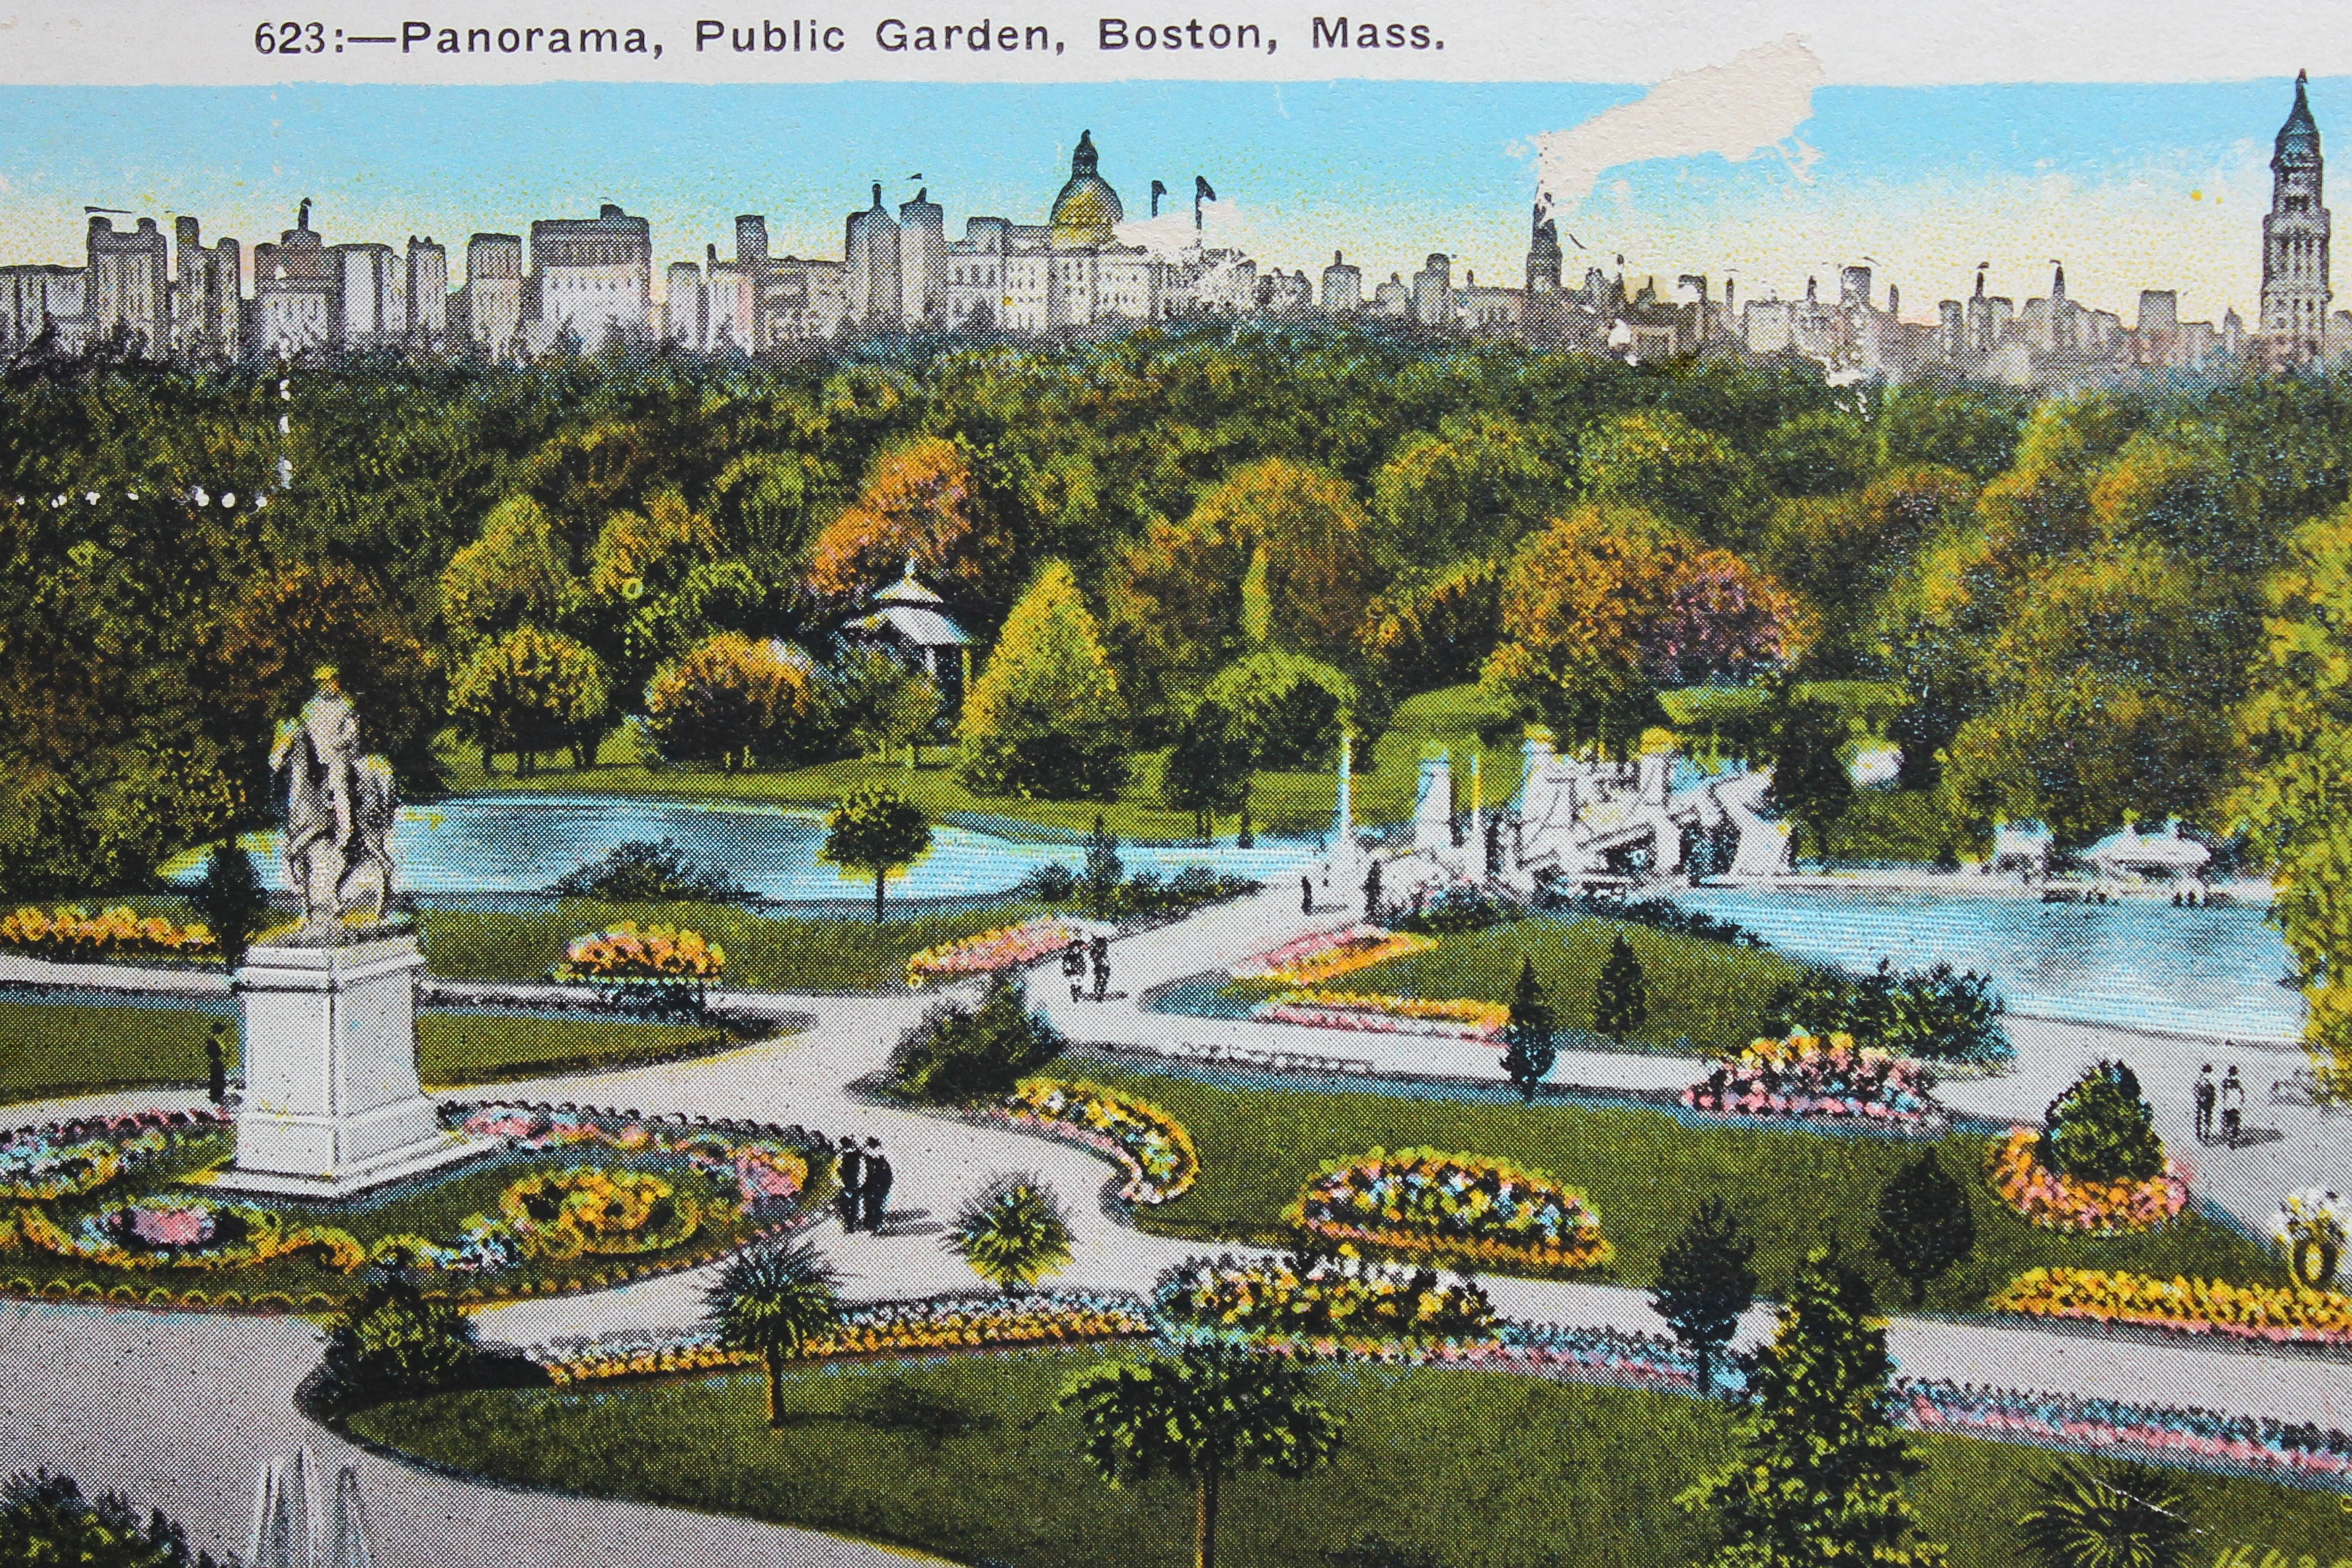 The Art of Planting: The Gardeners of Boston's Public Garden | Friends